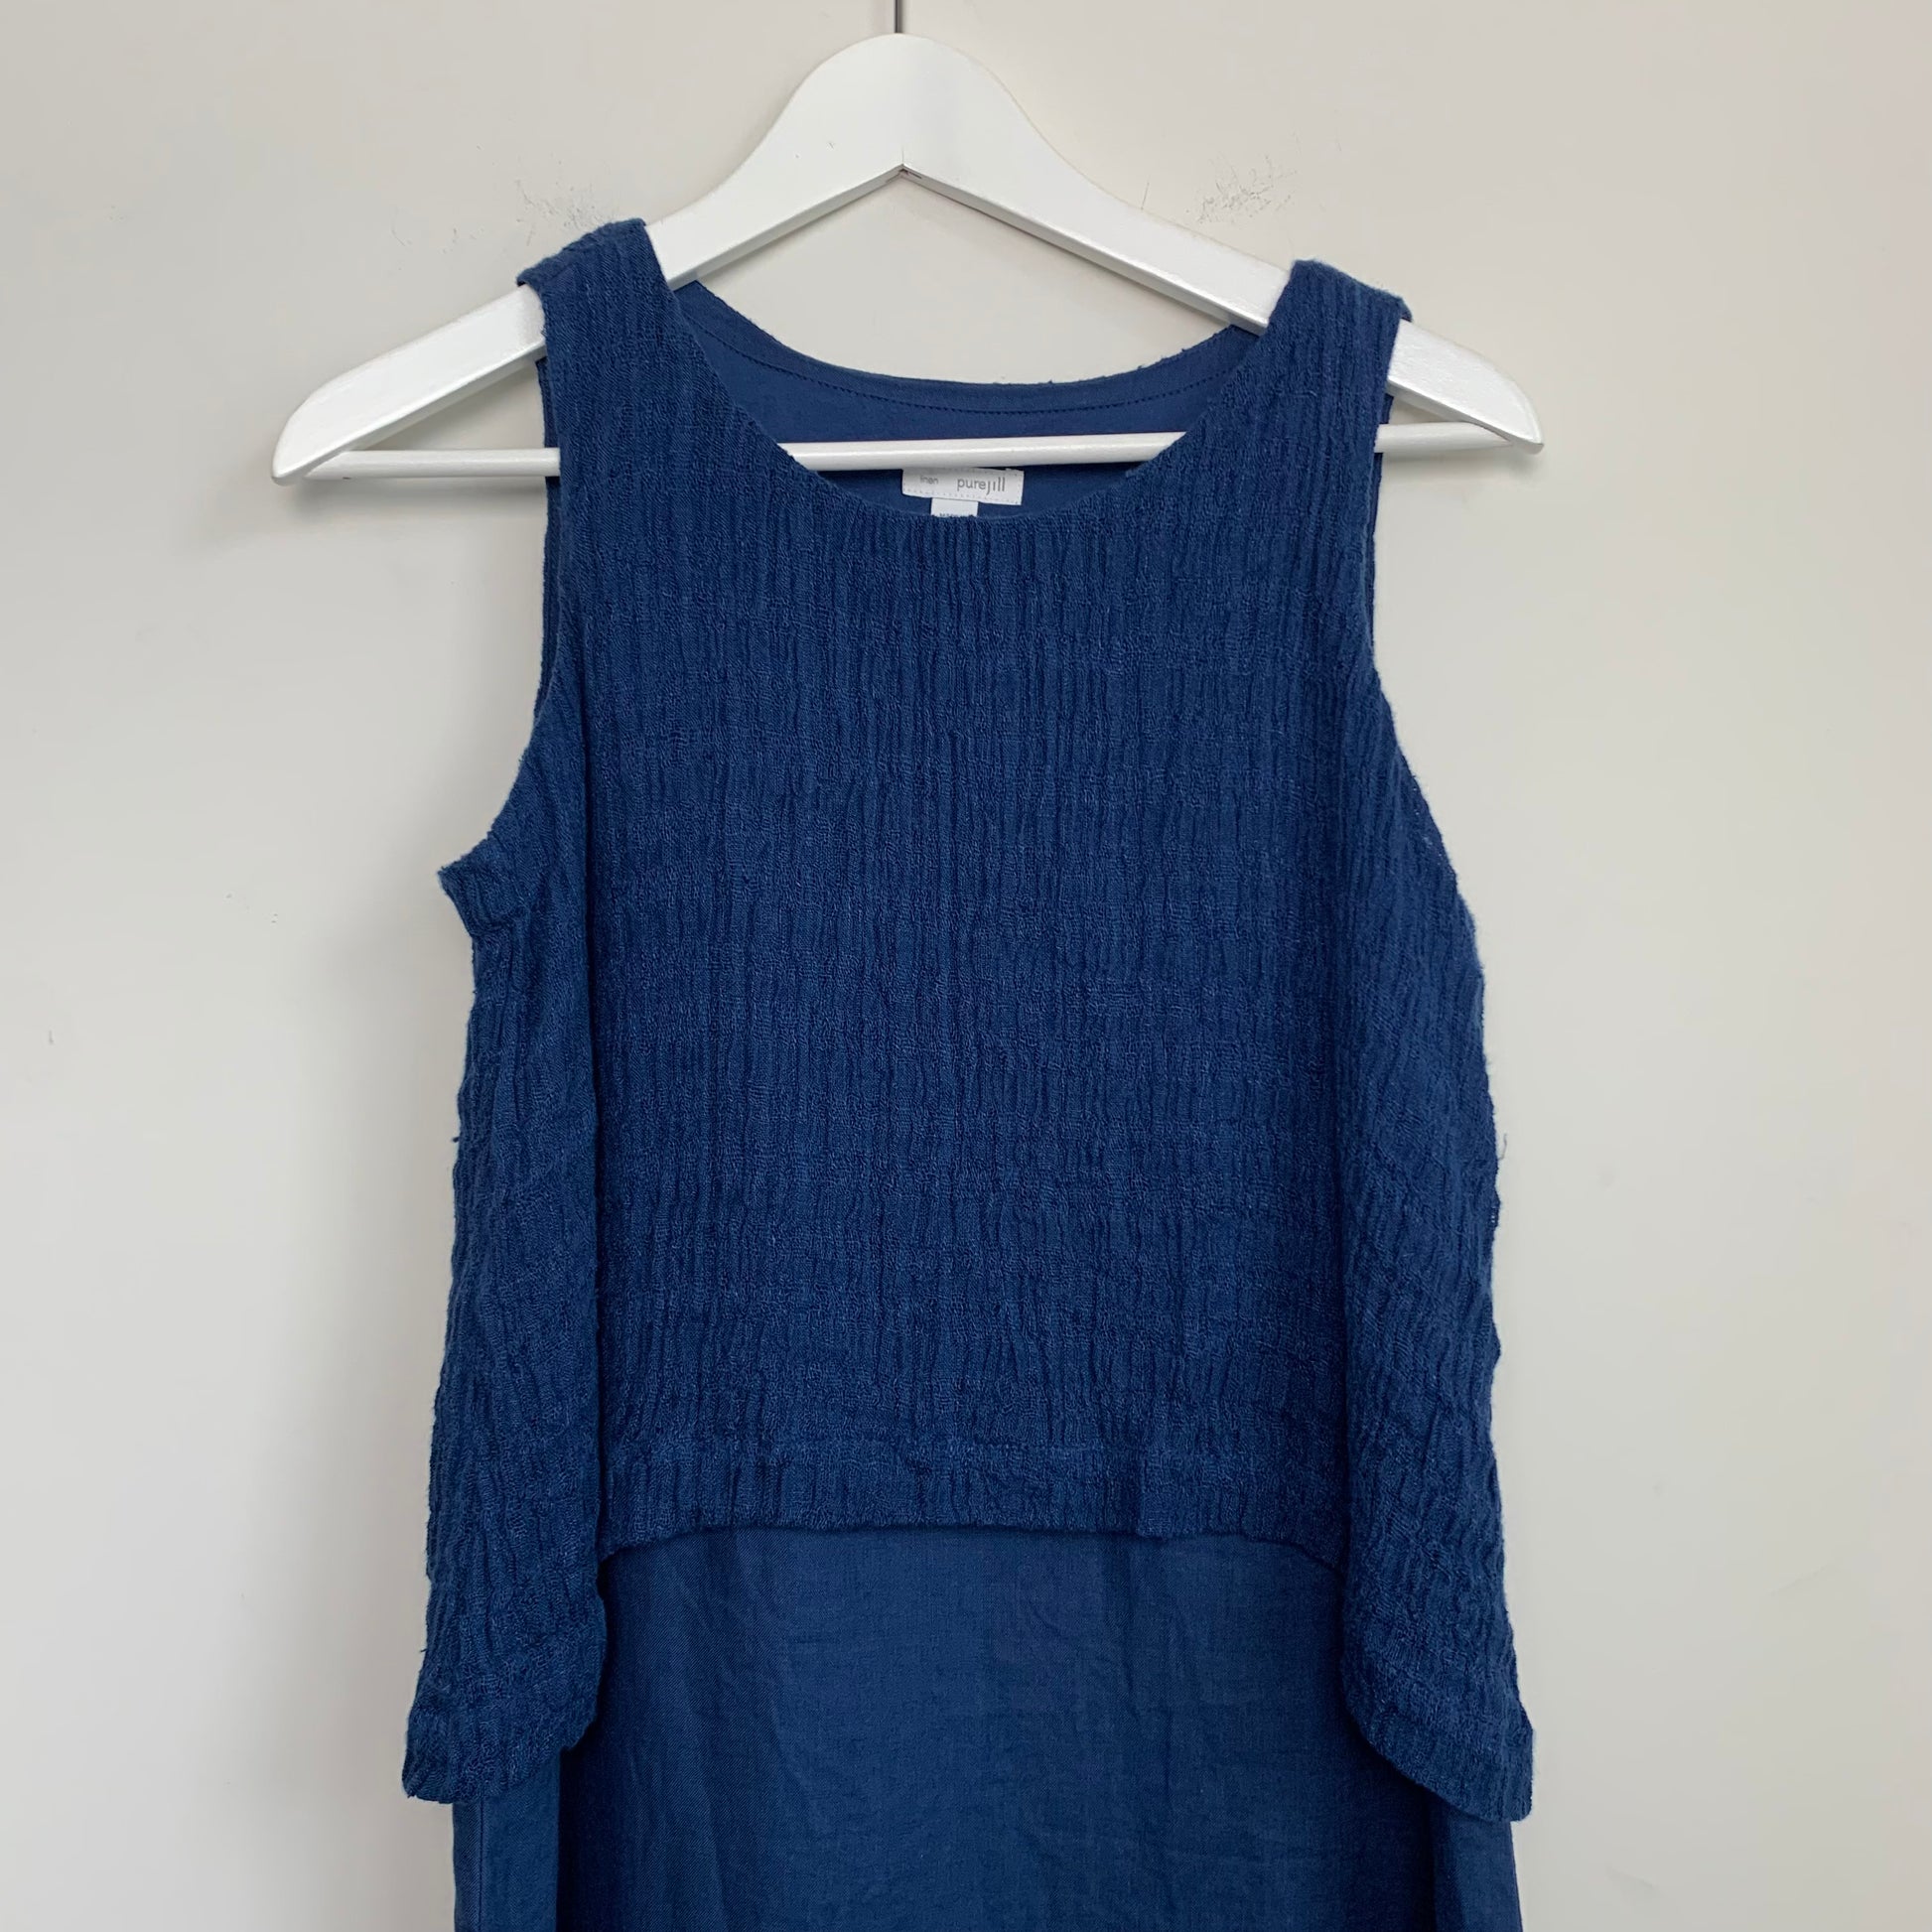 J.Jill Solid Navy Blue Casual Dress Size XL (Petite) - 71% off